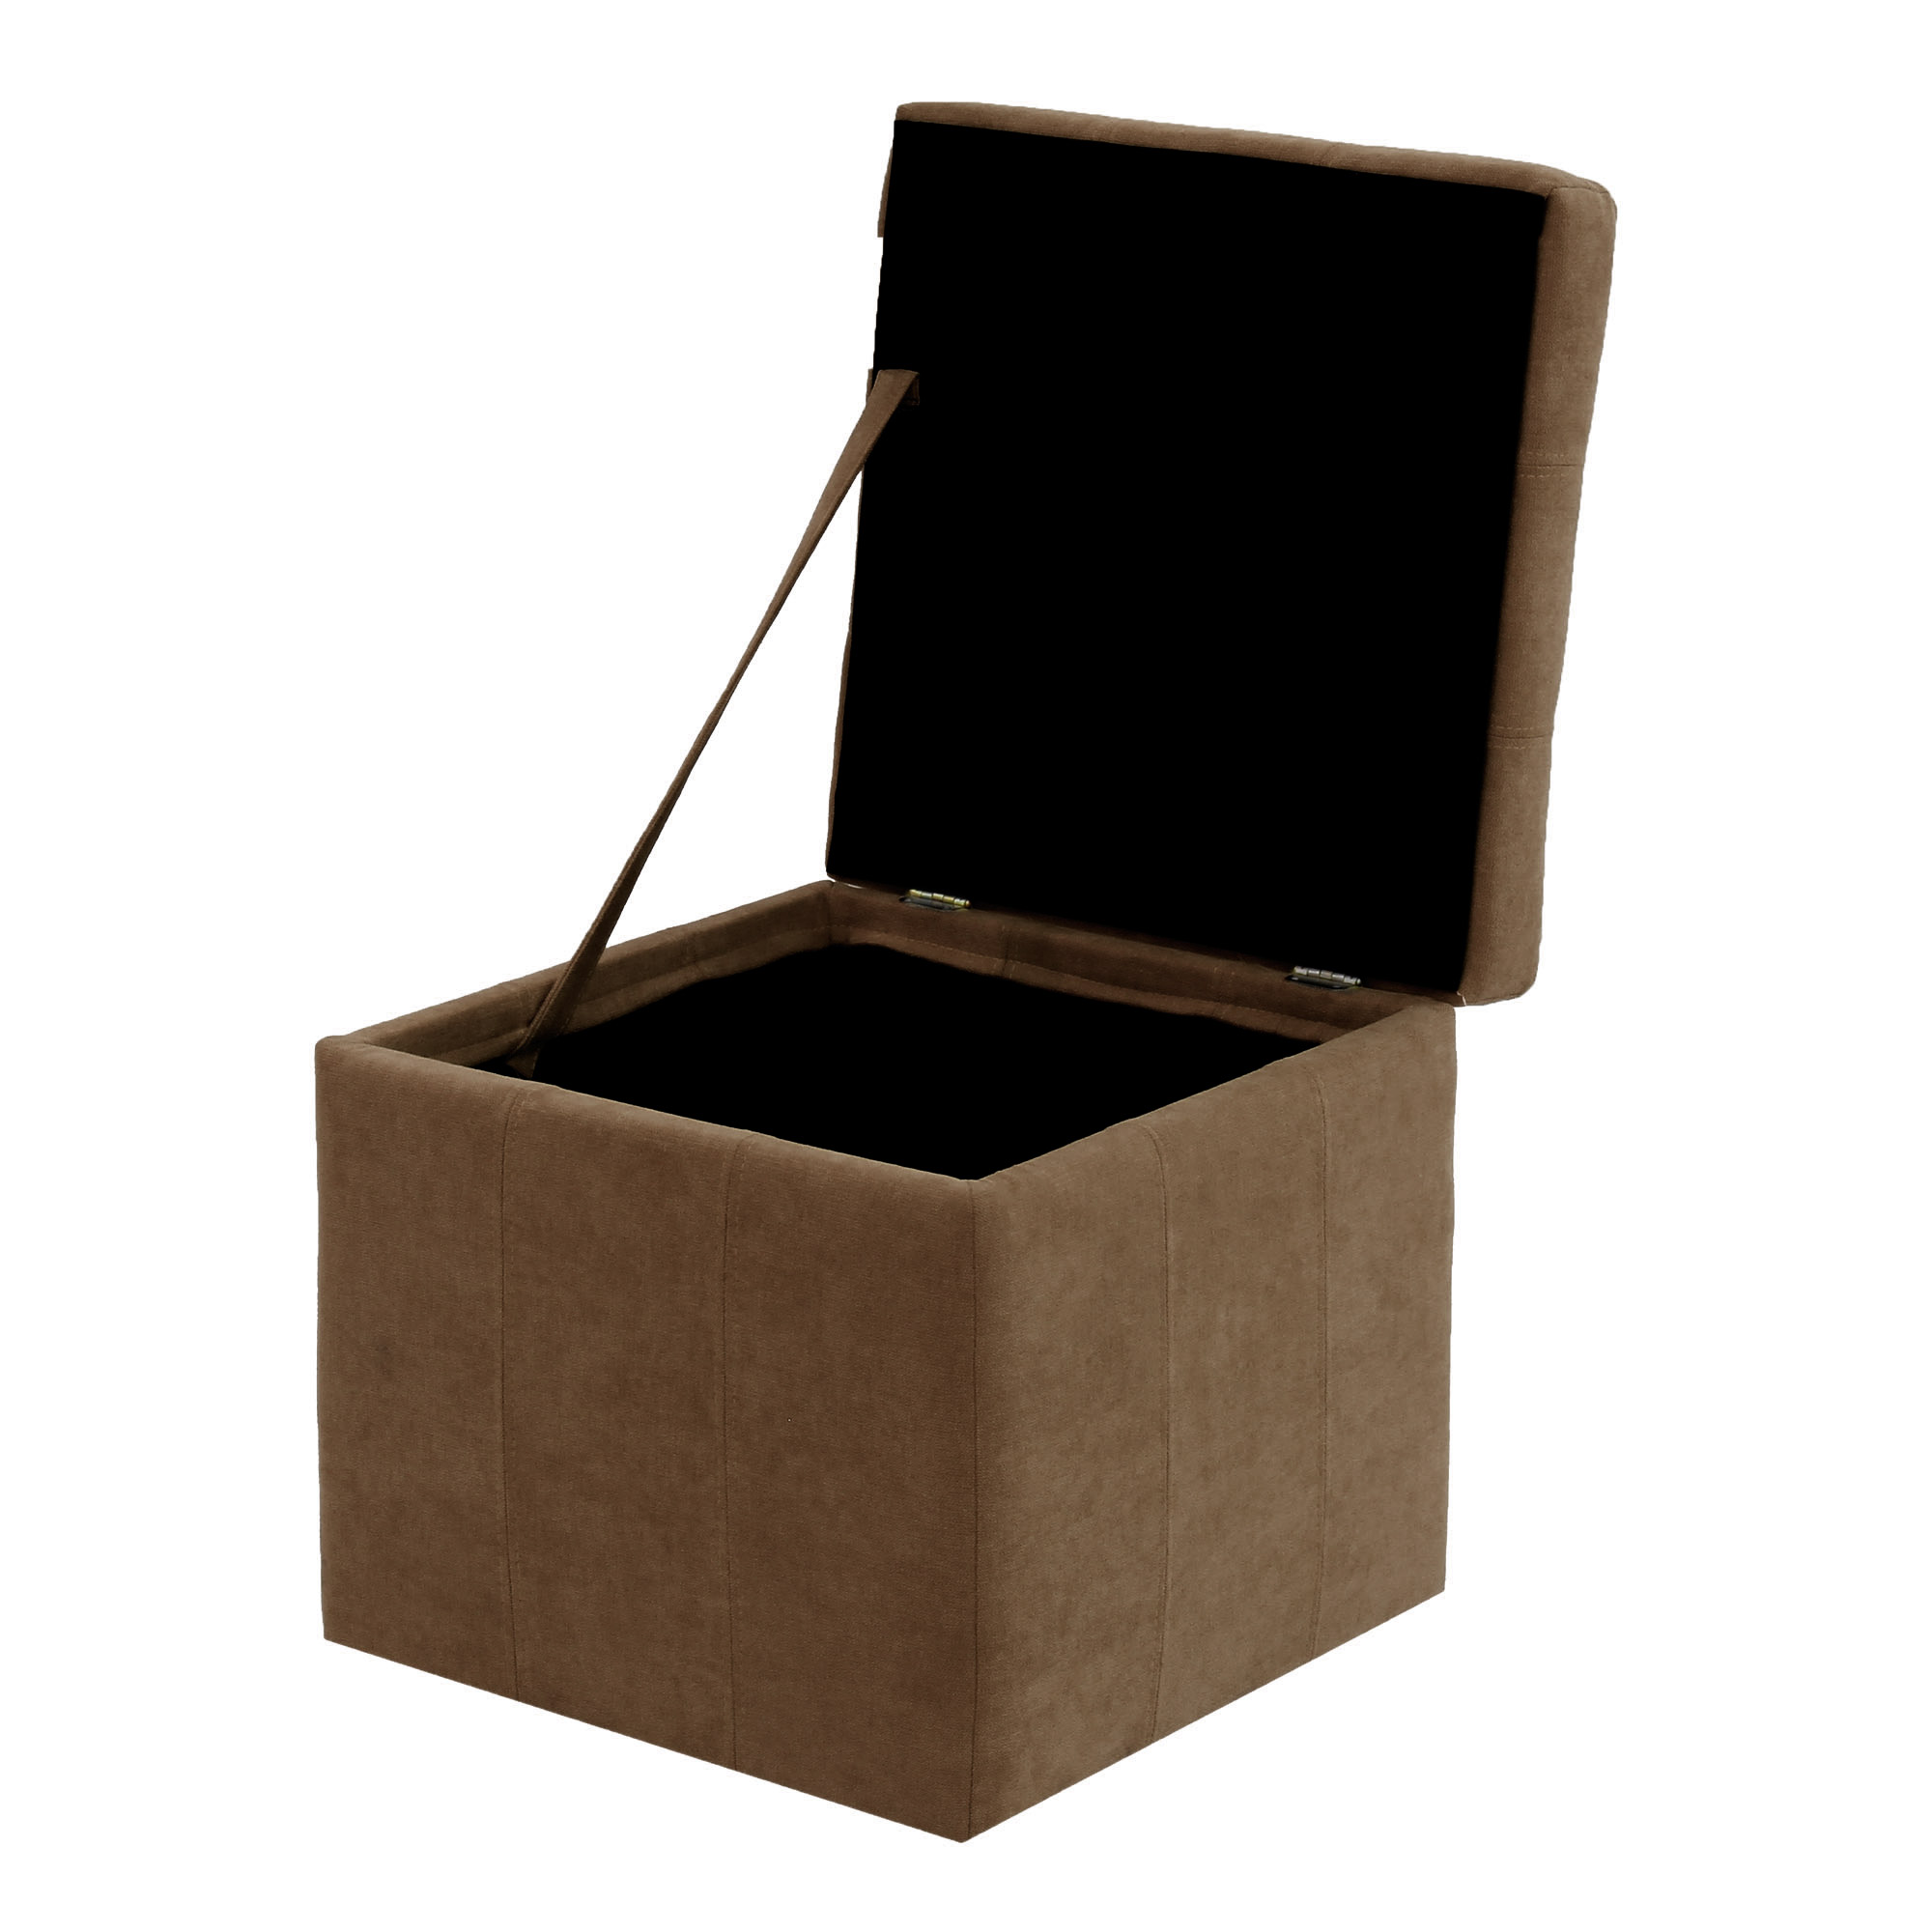 Банкетка Dreambag модерна коричневый велюр 46х46х46 см, размер 46х46х46 см - фото 4